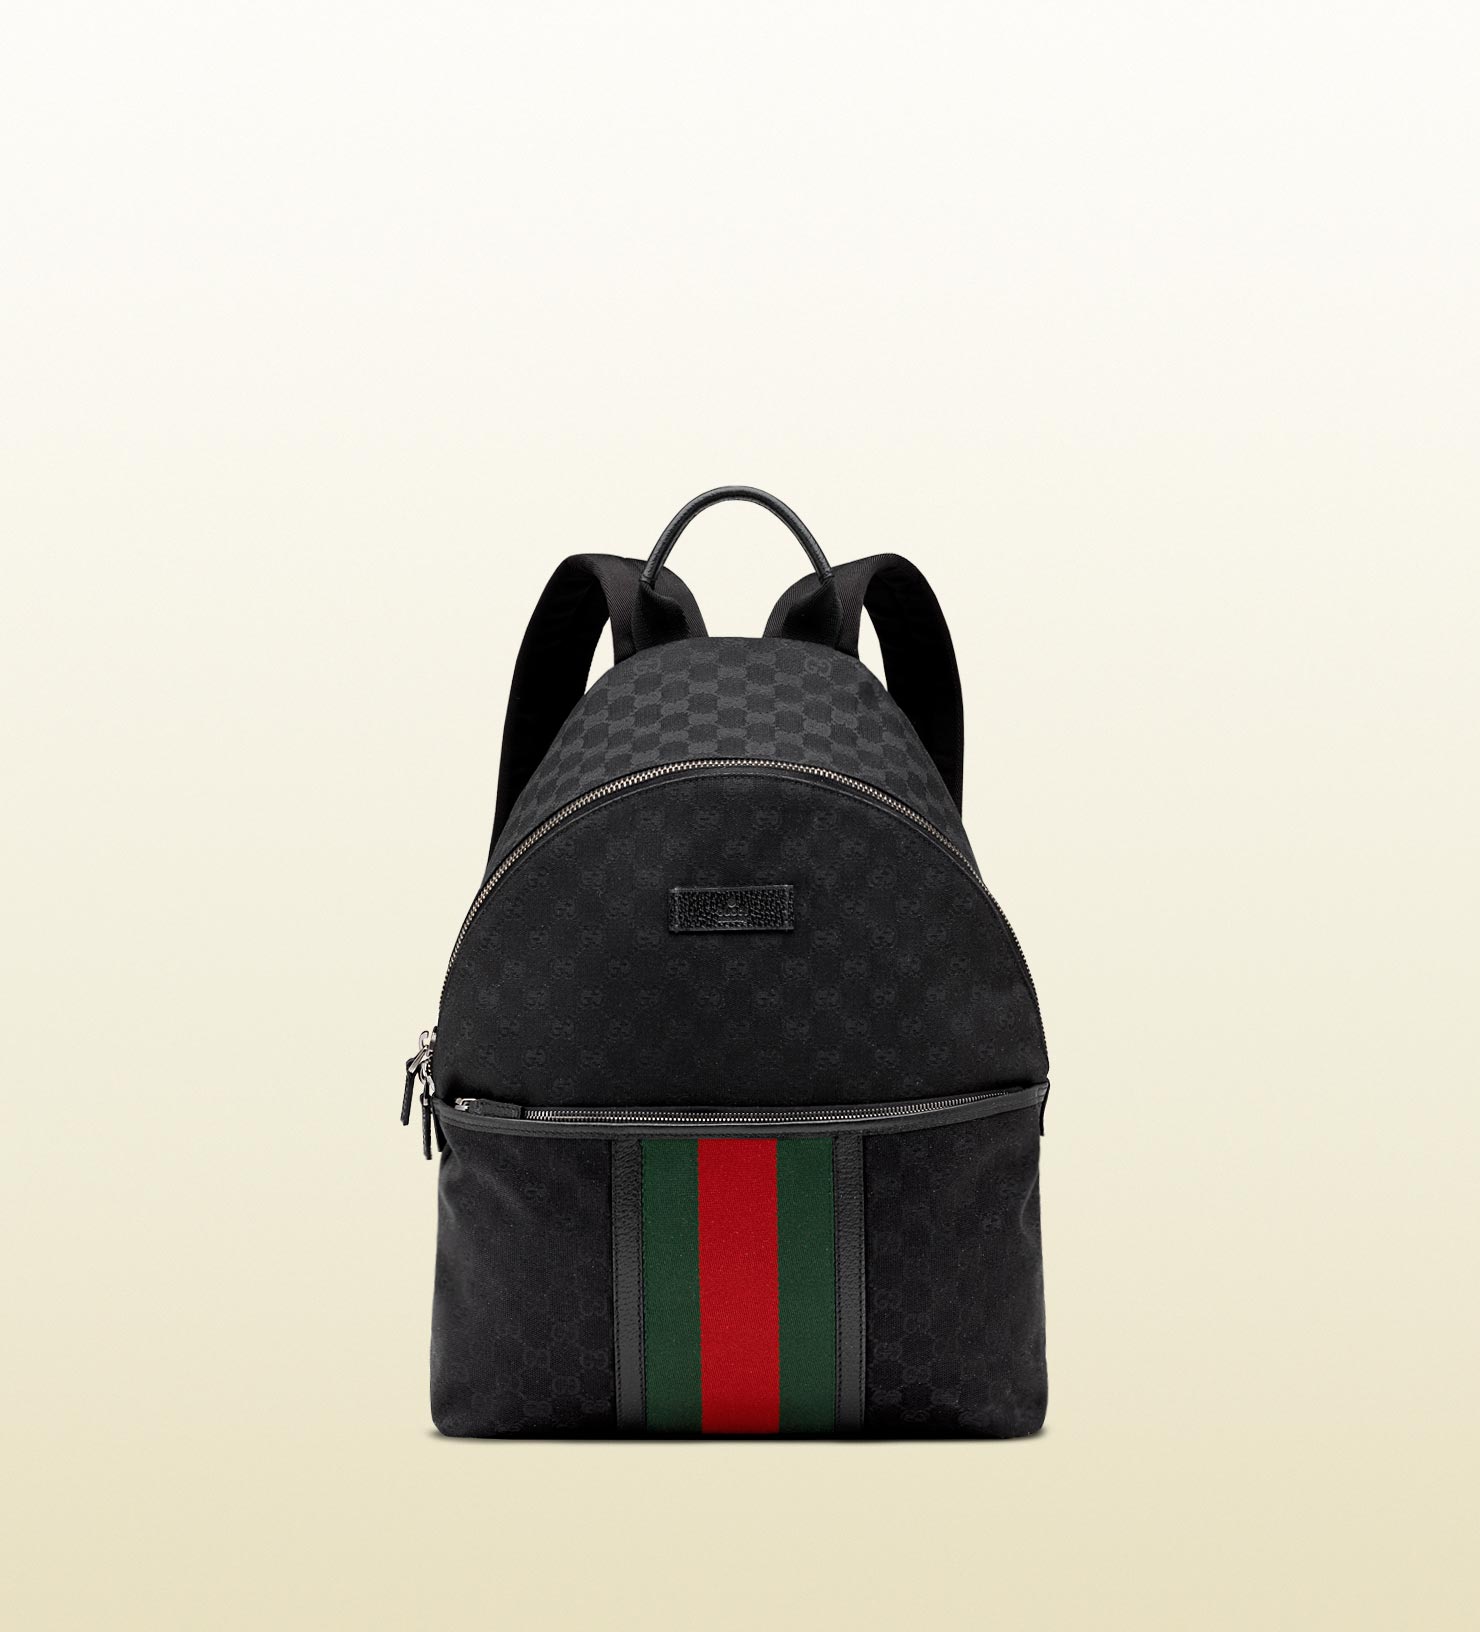 Lyst - Gucci Original Gg Canvas Backpack in Black for Men